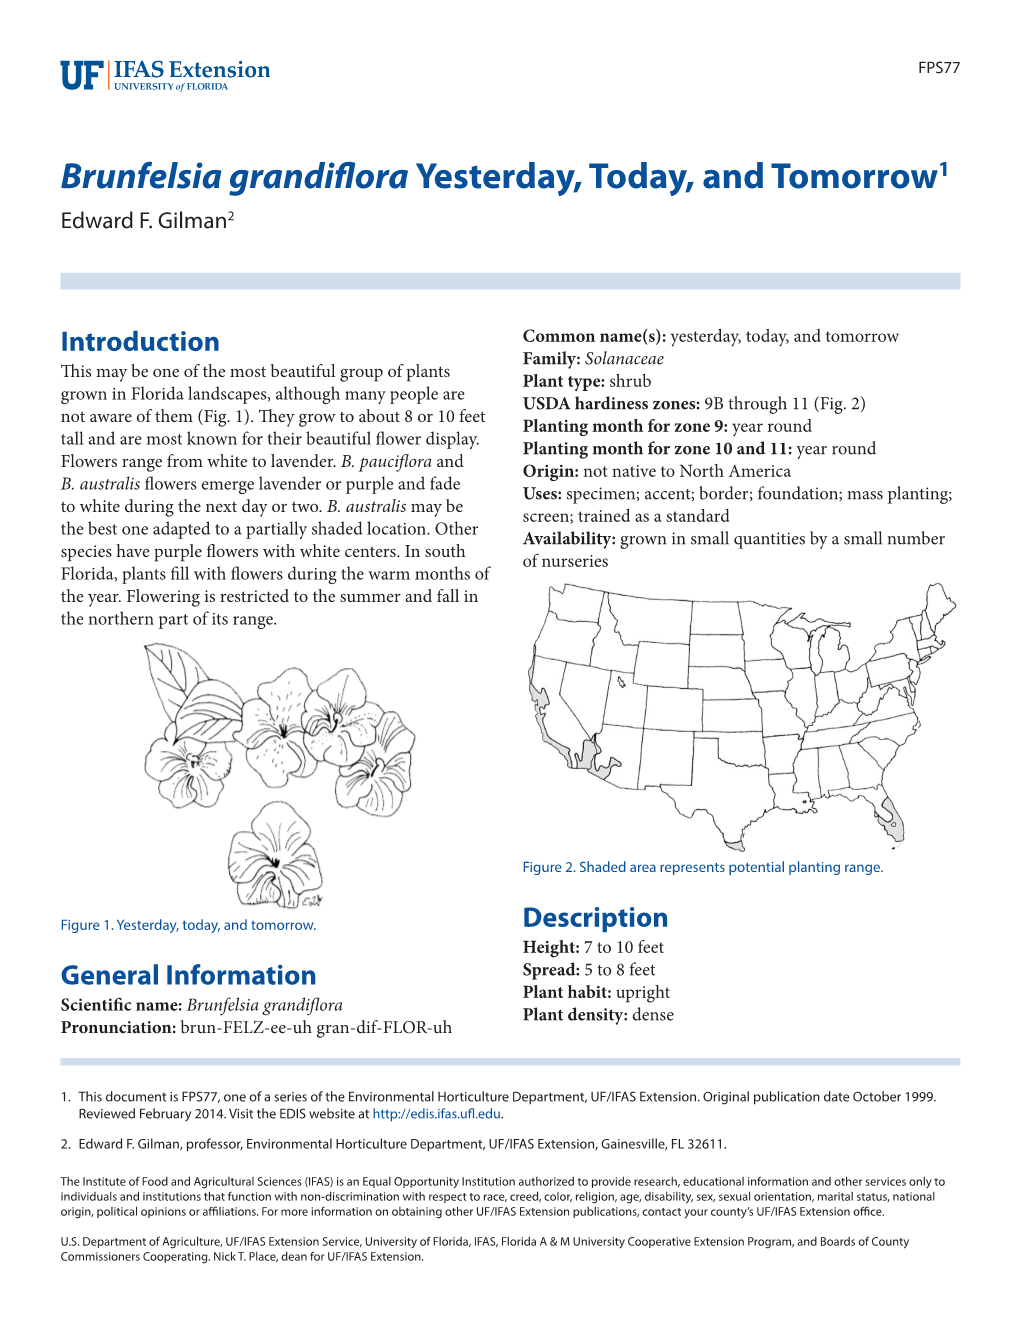 Brunfelsia Grandiflora Yesterday, Today, and Tomorrow1